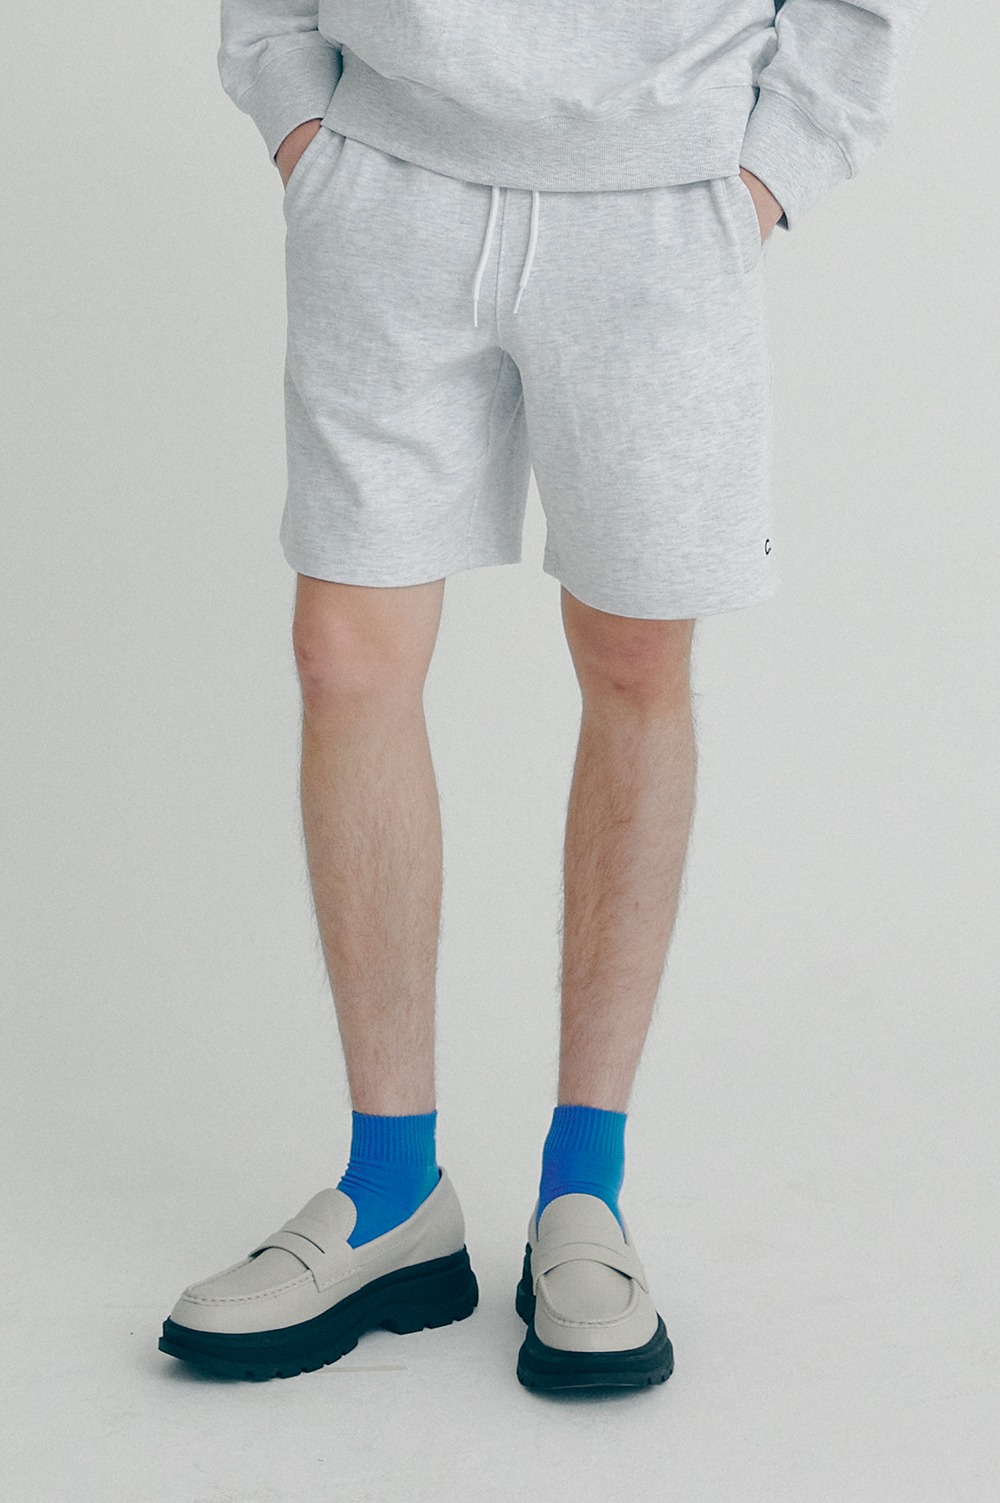 clove - New Active Half Shorts_Men (Light Grey)